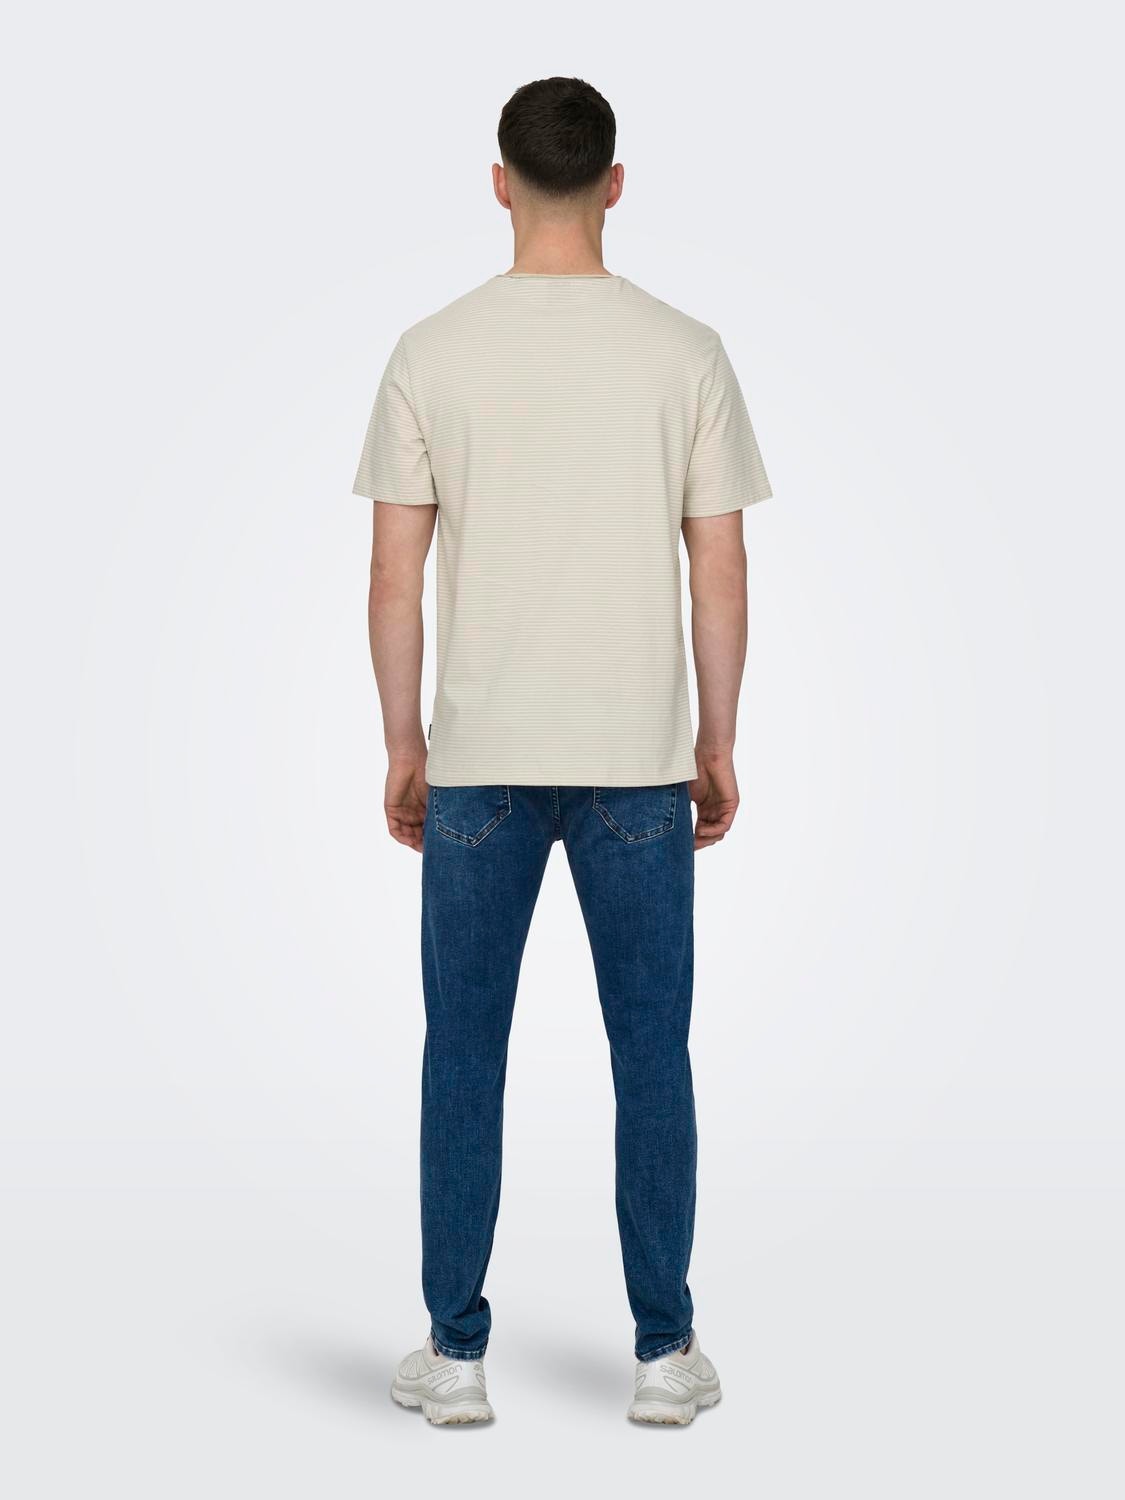 ONLY & SONS Normal geschnitten Rundhals T-Shirt -White - 22025680